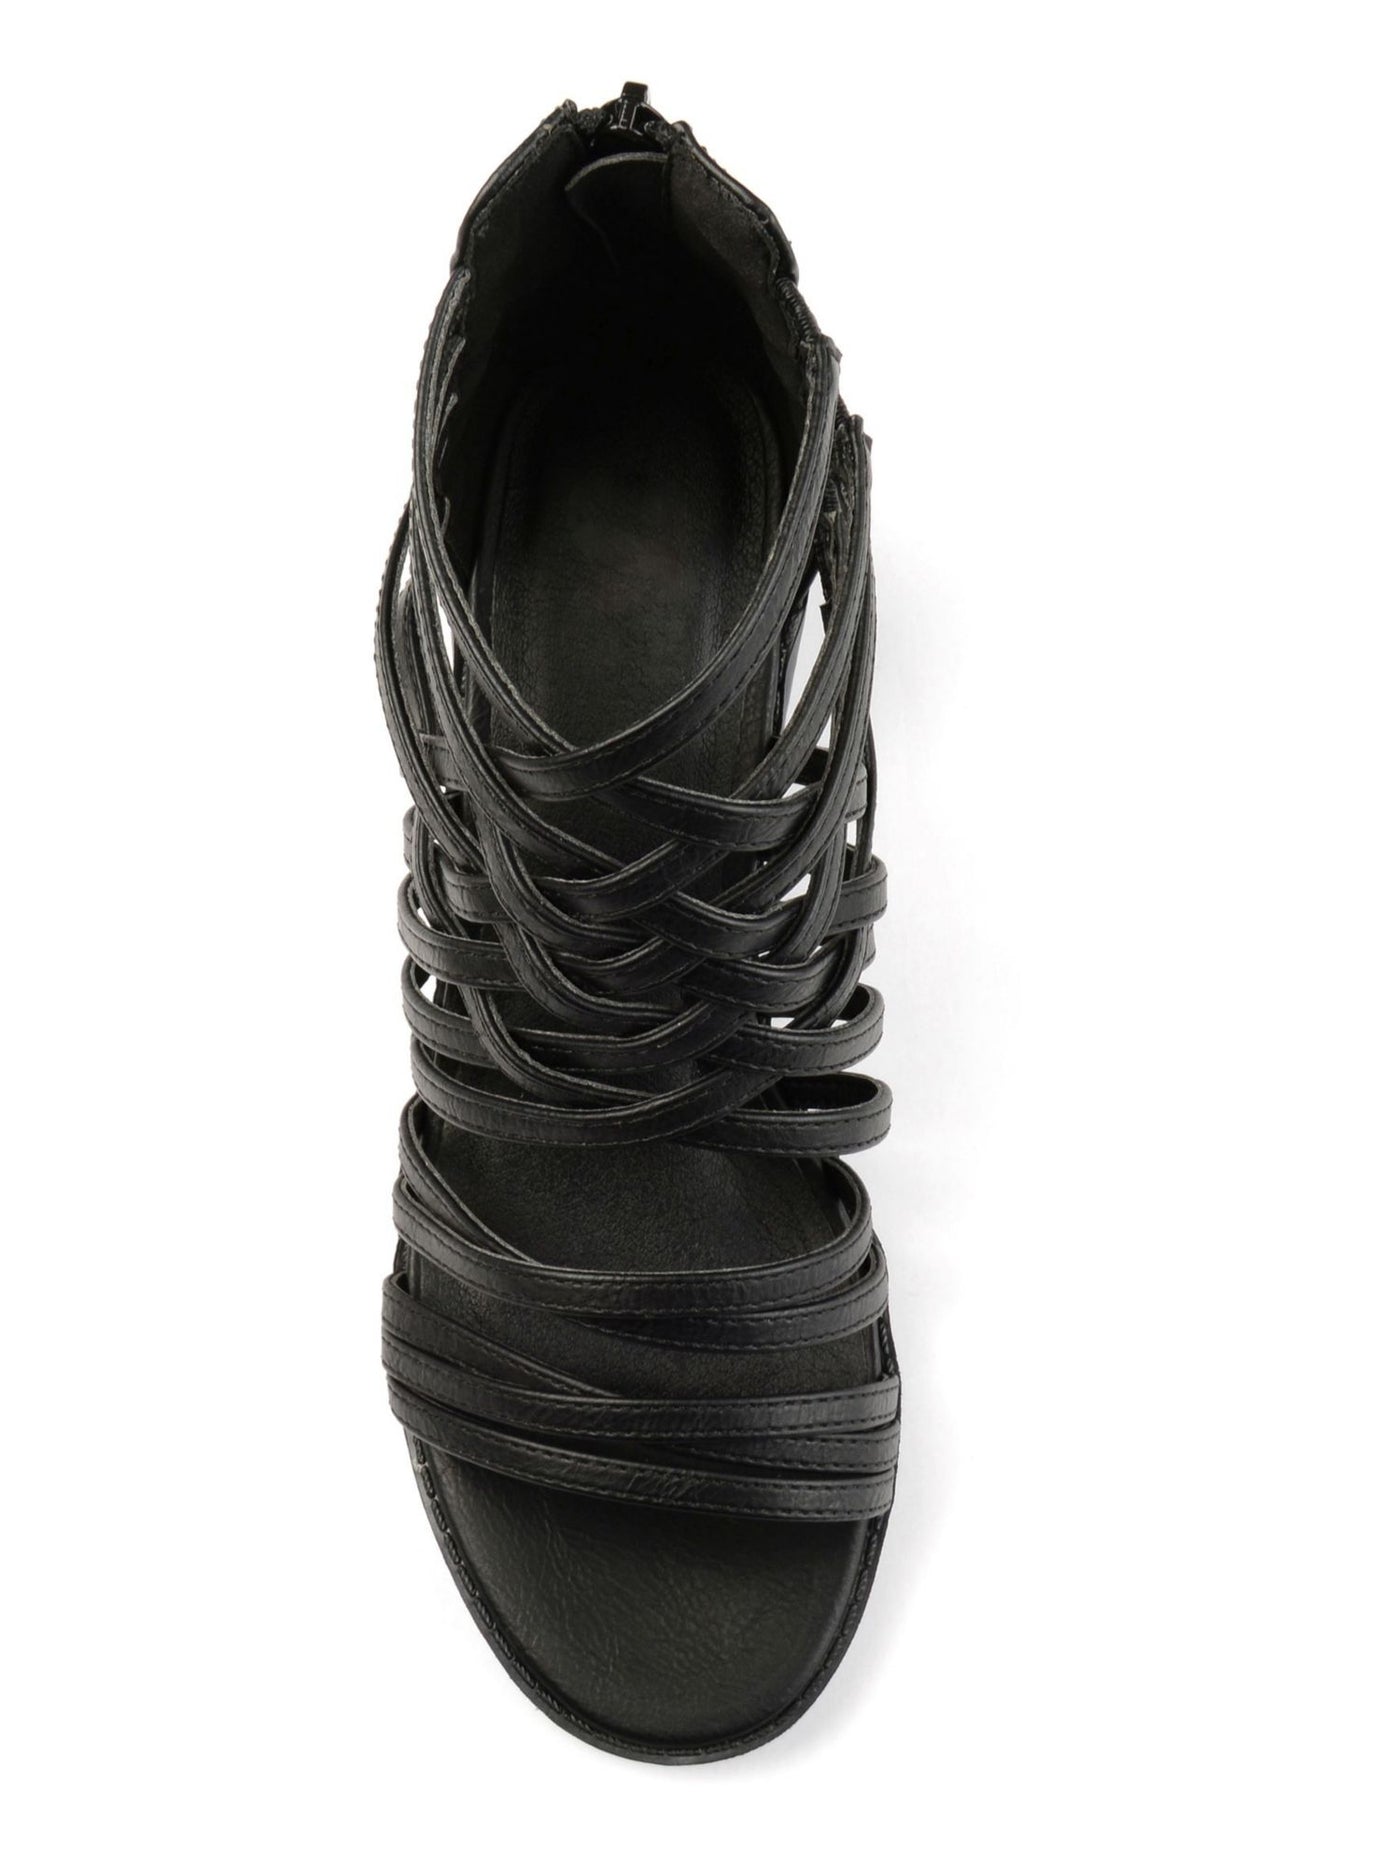 JOURNEE COLLECTION Womens Black Strappy Diya Round Toe Block Heel Zip-Up Sandals Shoes 6